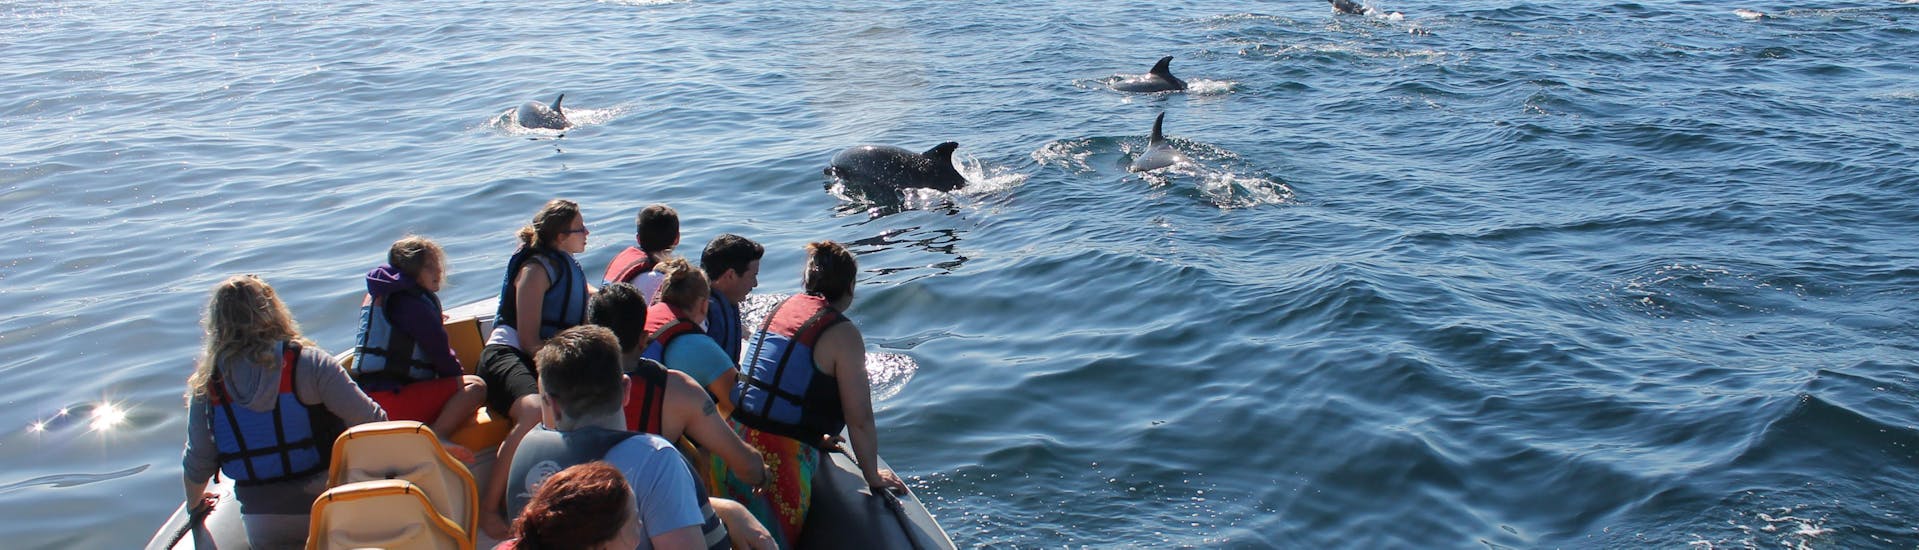 Boat Tour "Dolphin Watching" - Praia Da Luz.